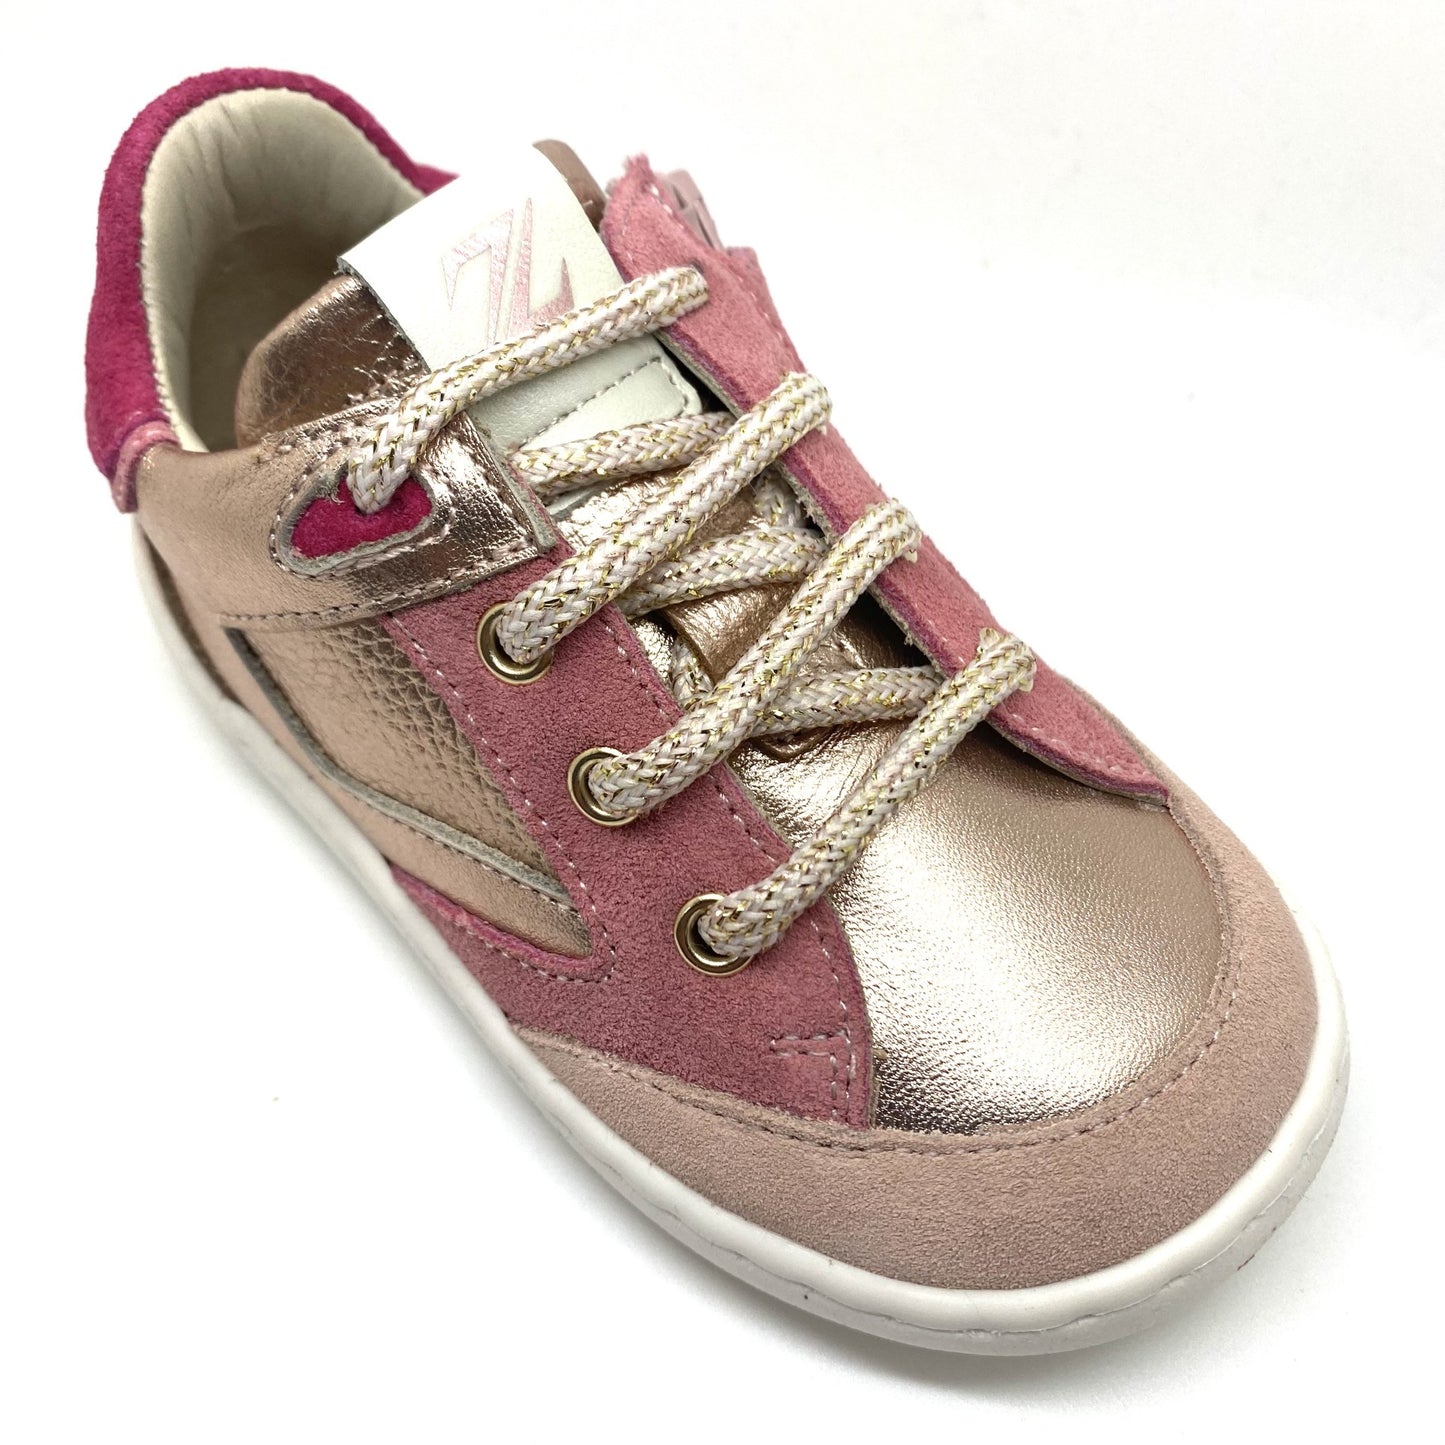 Zecchino D'oro lage roze sneaker.